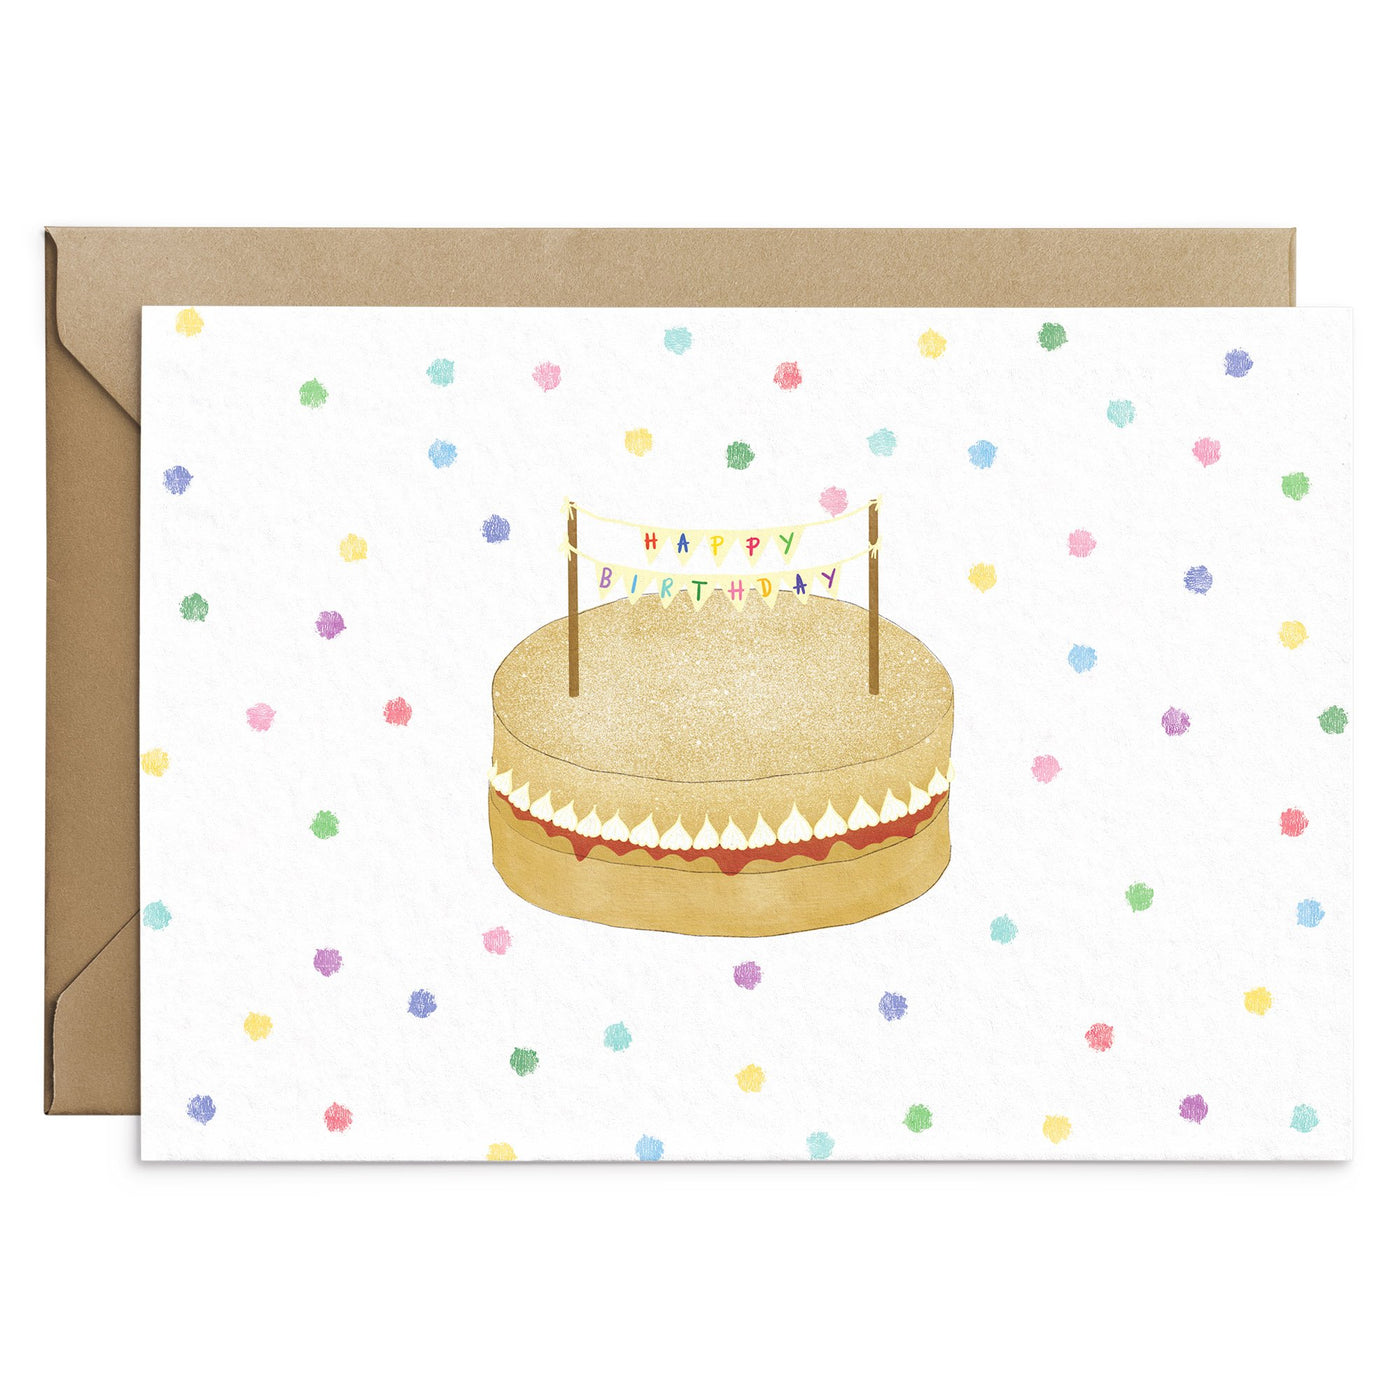 Dotty Birthday Cake Card - Poppins & Co.